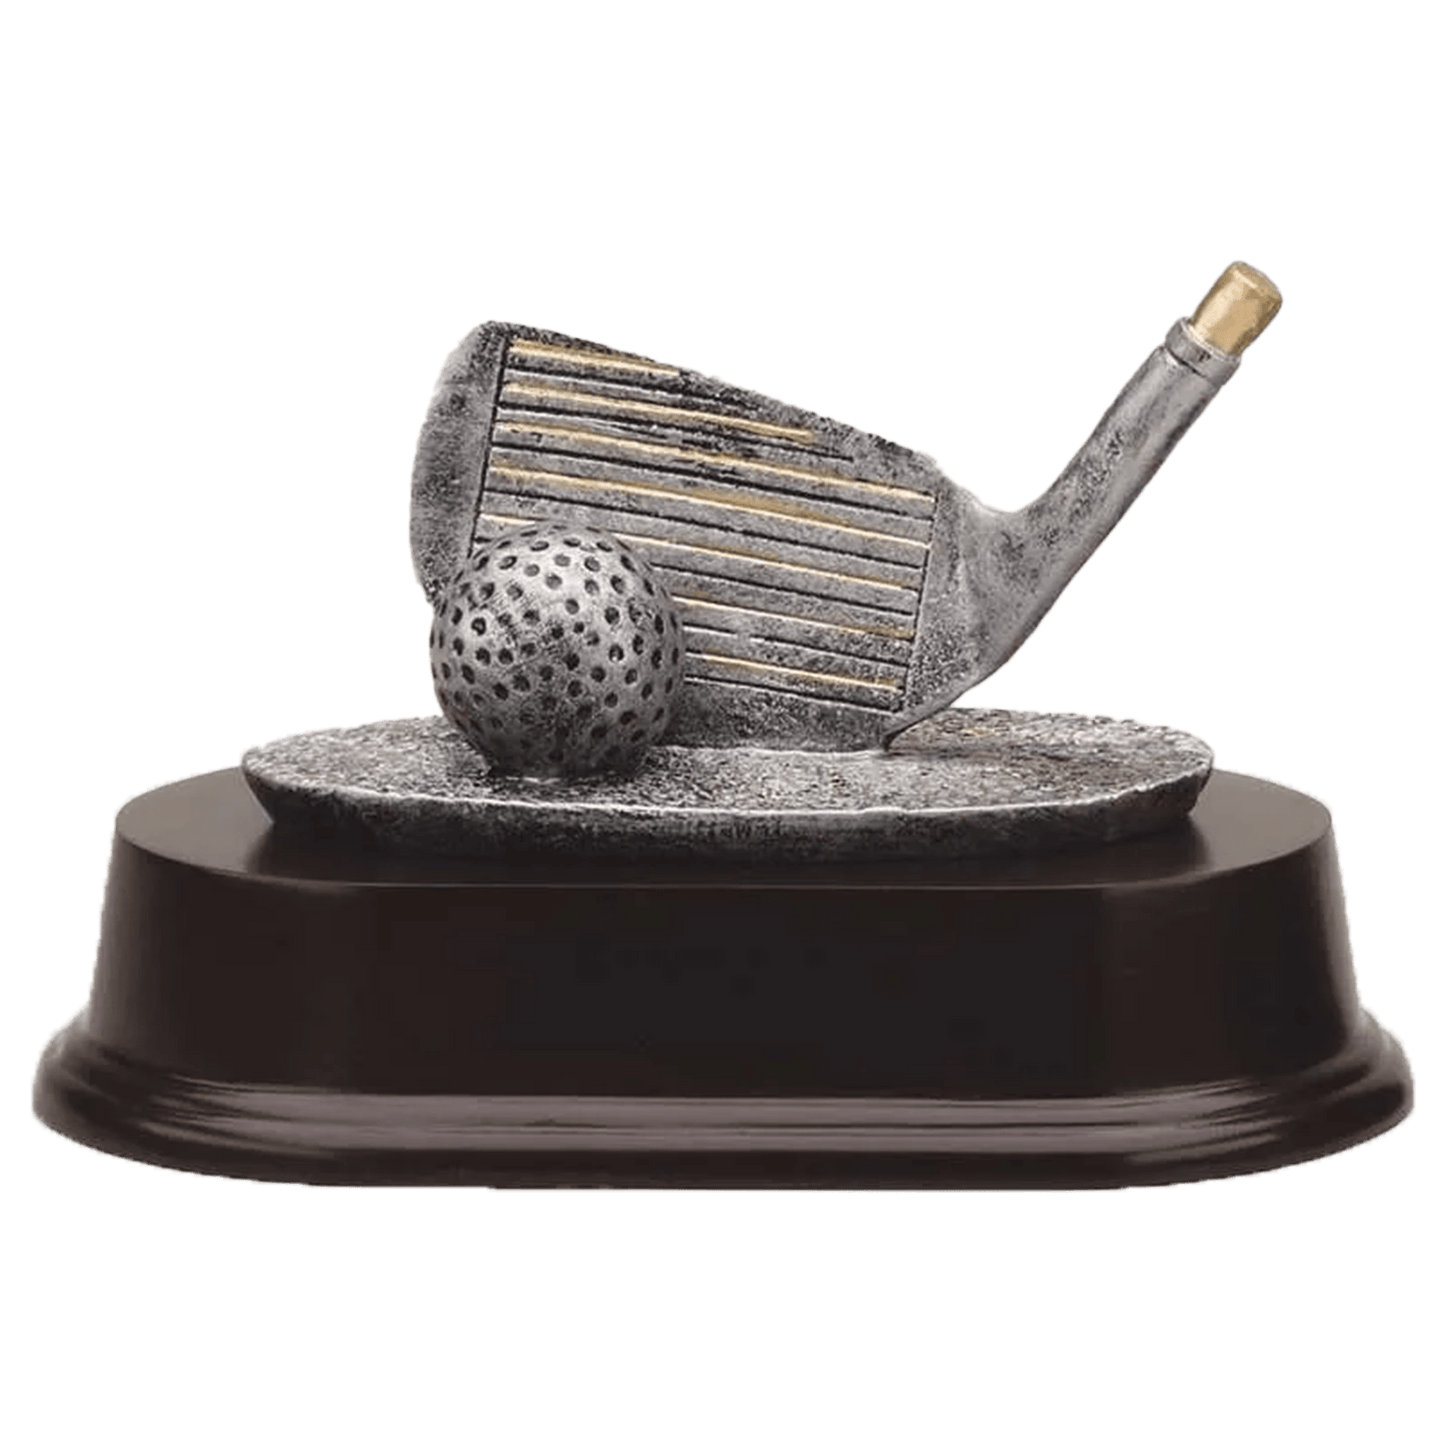 Resin Golf Ball & Silver-Gold Driver Award - Whoa, Jody Boy!